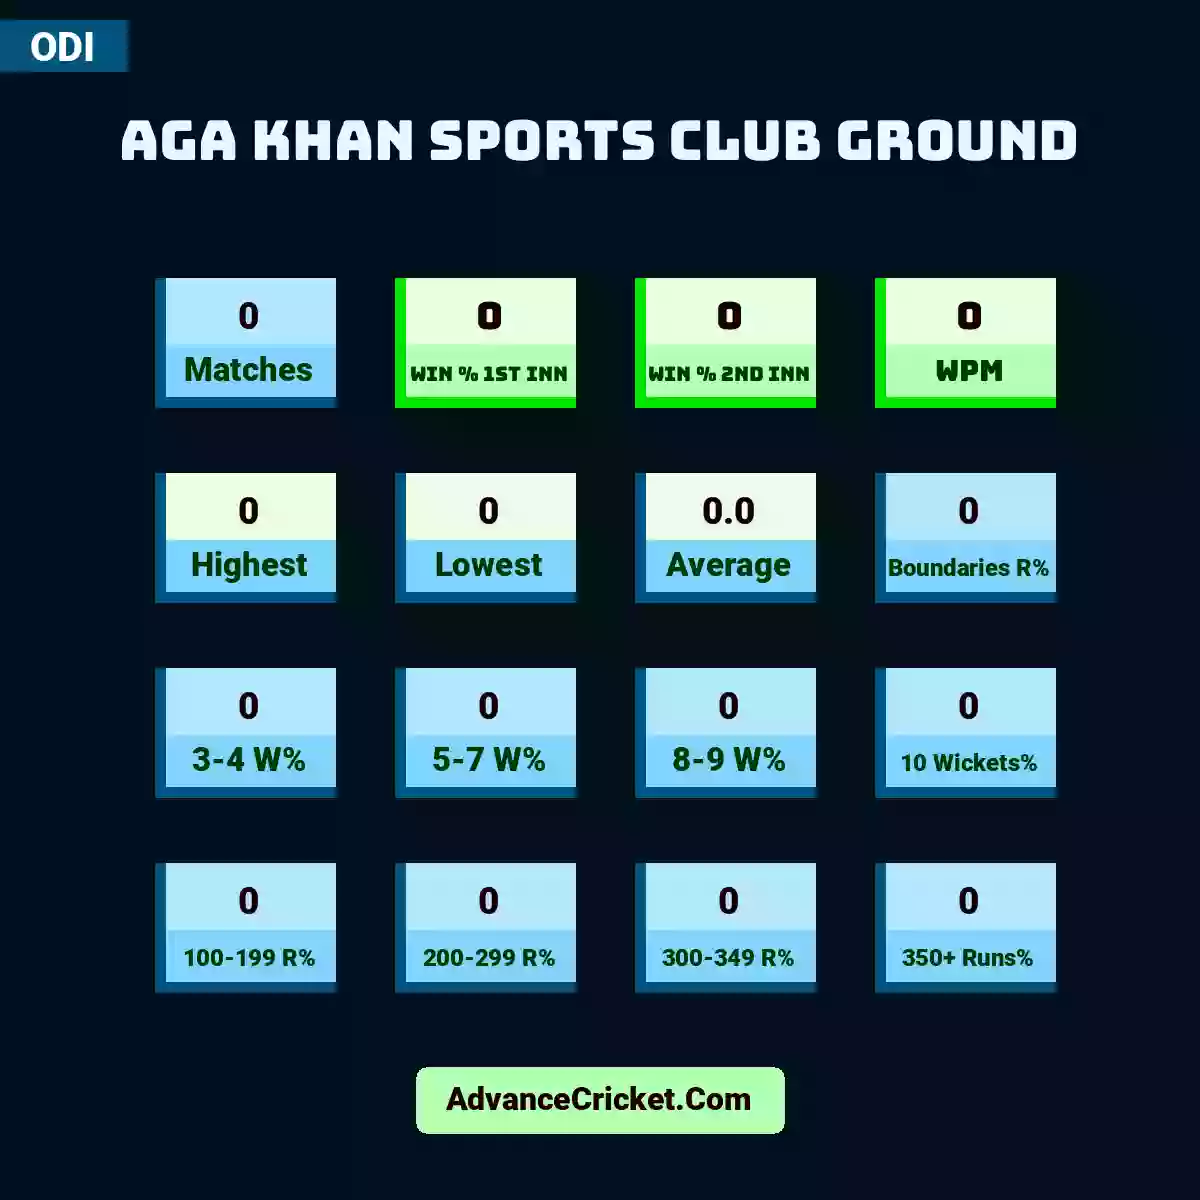 Image showing Aga Khan Sports Club Ground with Matches: 0, Win % 1st Inn: 0, Win % 2nd Inn: 0, WPM: 0, Highest: 0, Lowest: 0, Average: 0.0, Boundaries R%: 0, 3-4 W%: 0, 5-7 W%: 0, 8-9 W%: 0, 10 Wickets%: 0, 100-199 R%: 0, 200-299 R%: 0, 300-349 R%: 0, 350+ Runs%: 0.